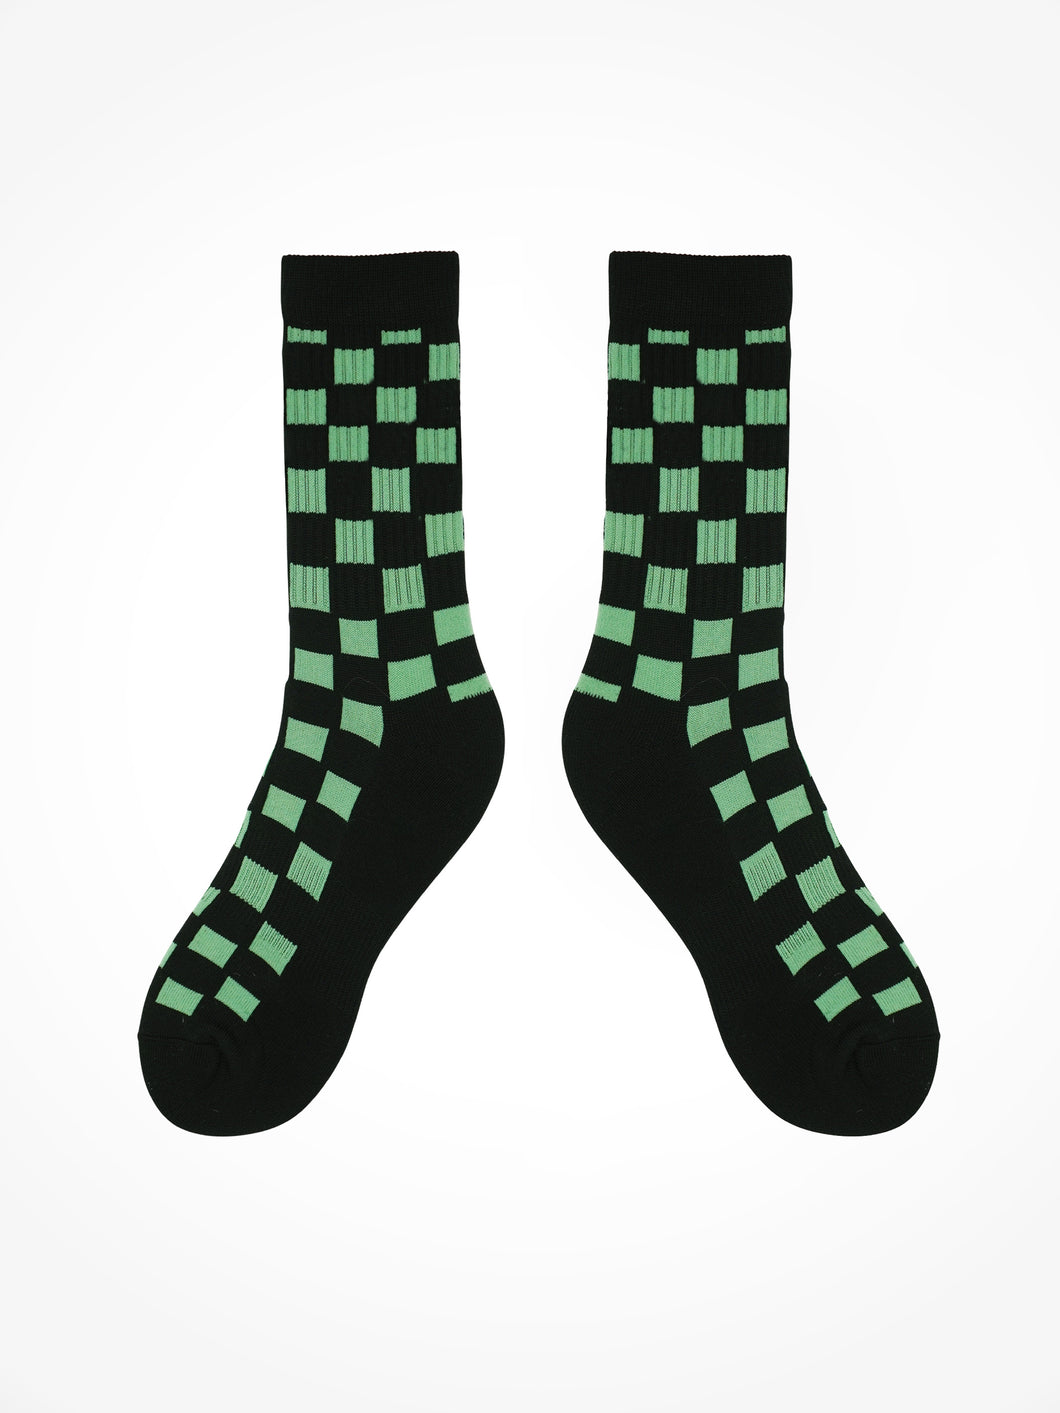 Black and Green Checkered Socks